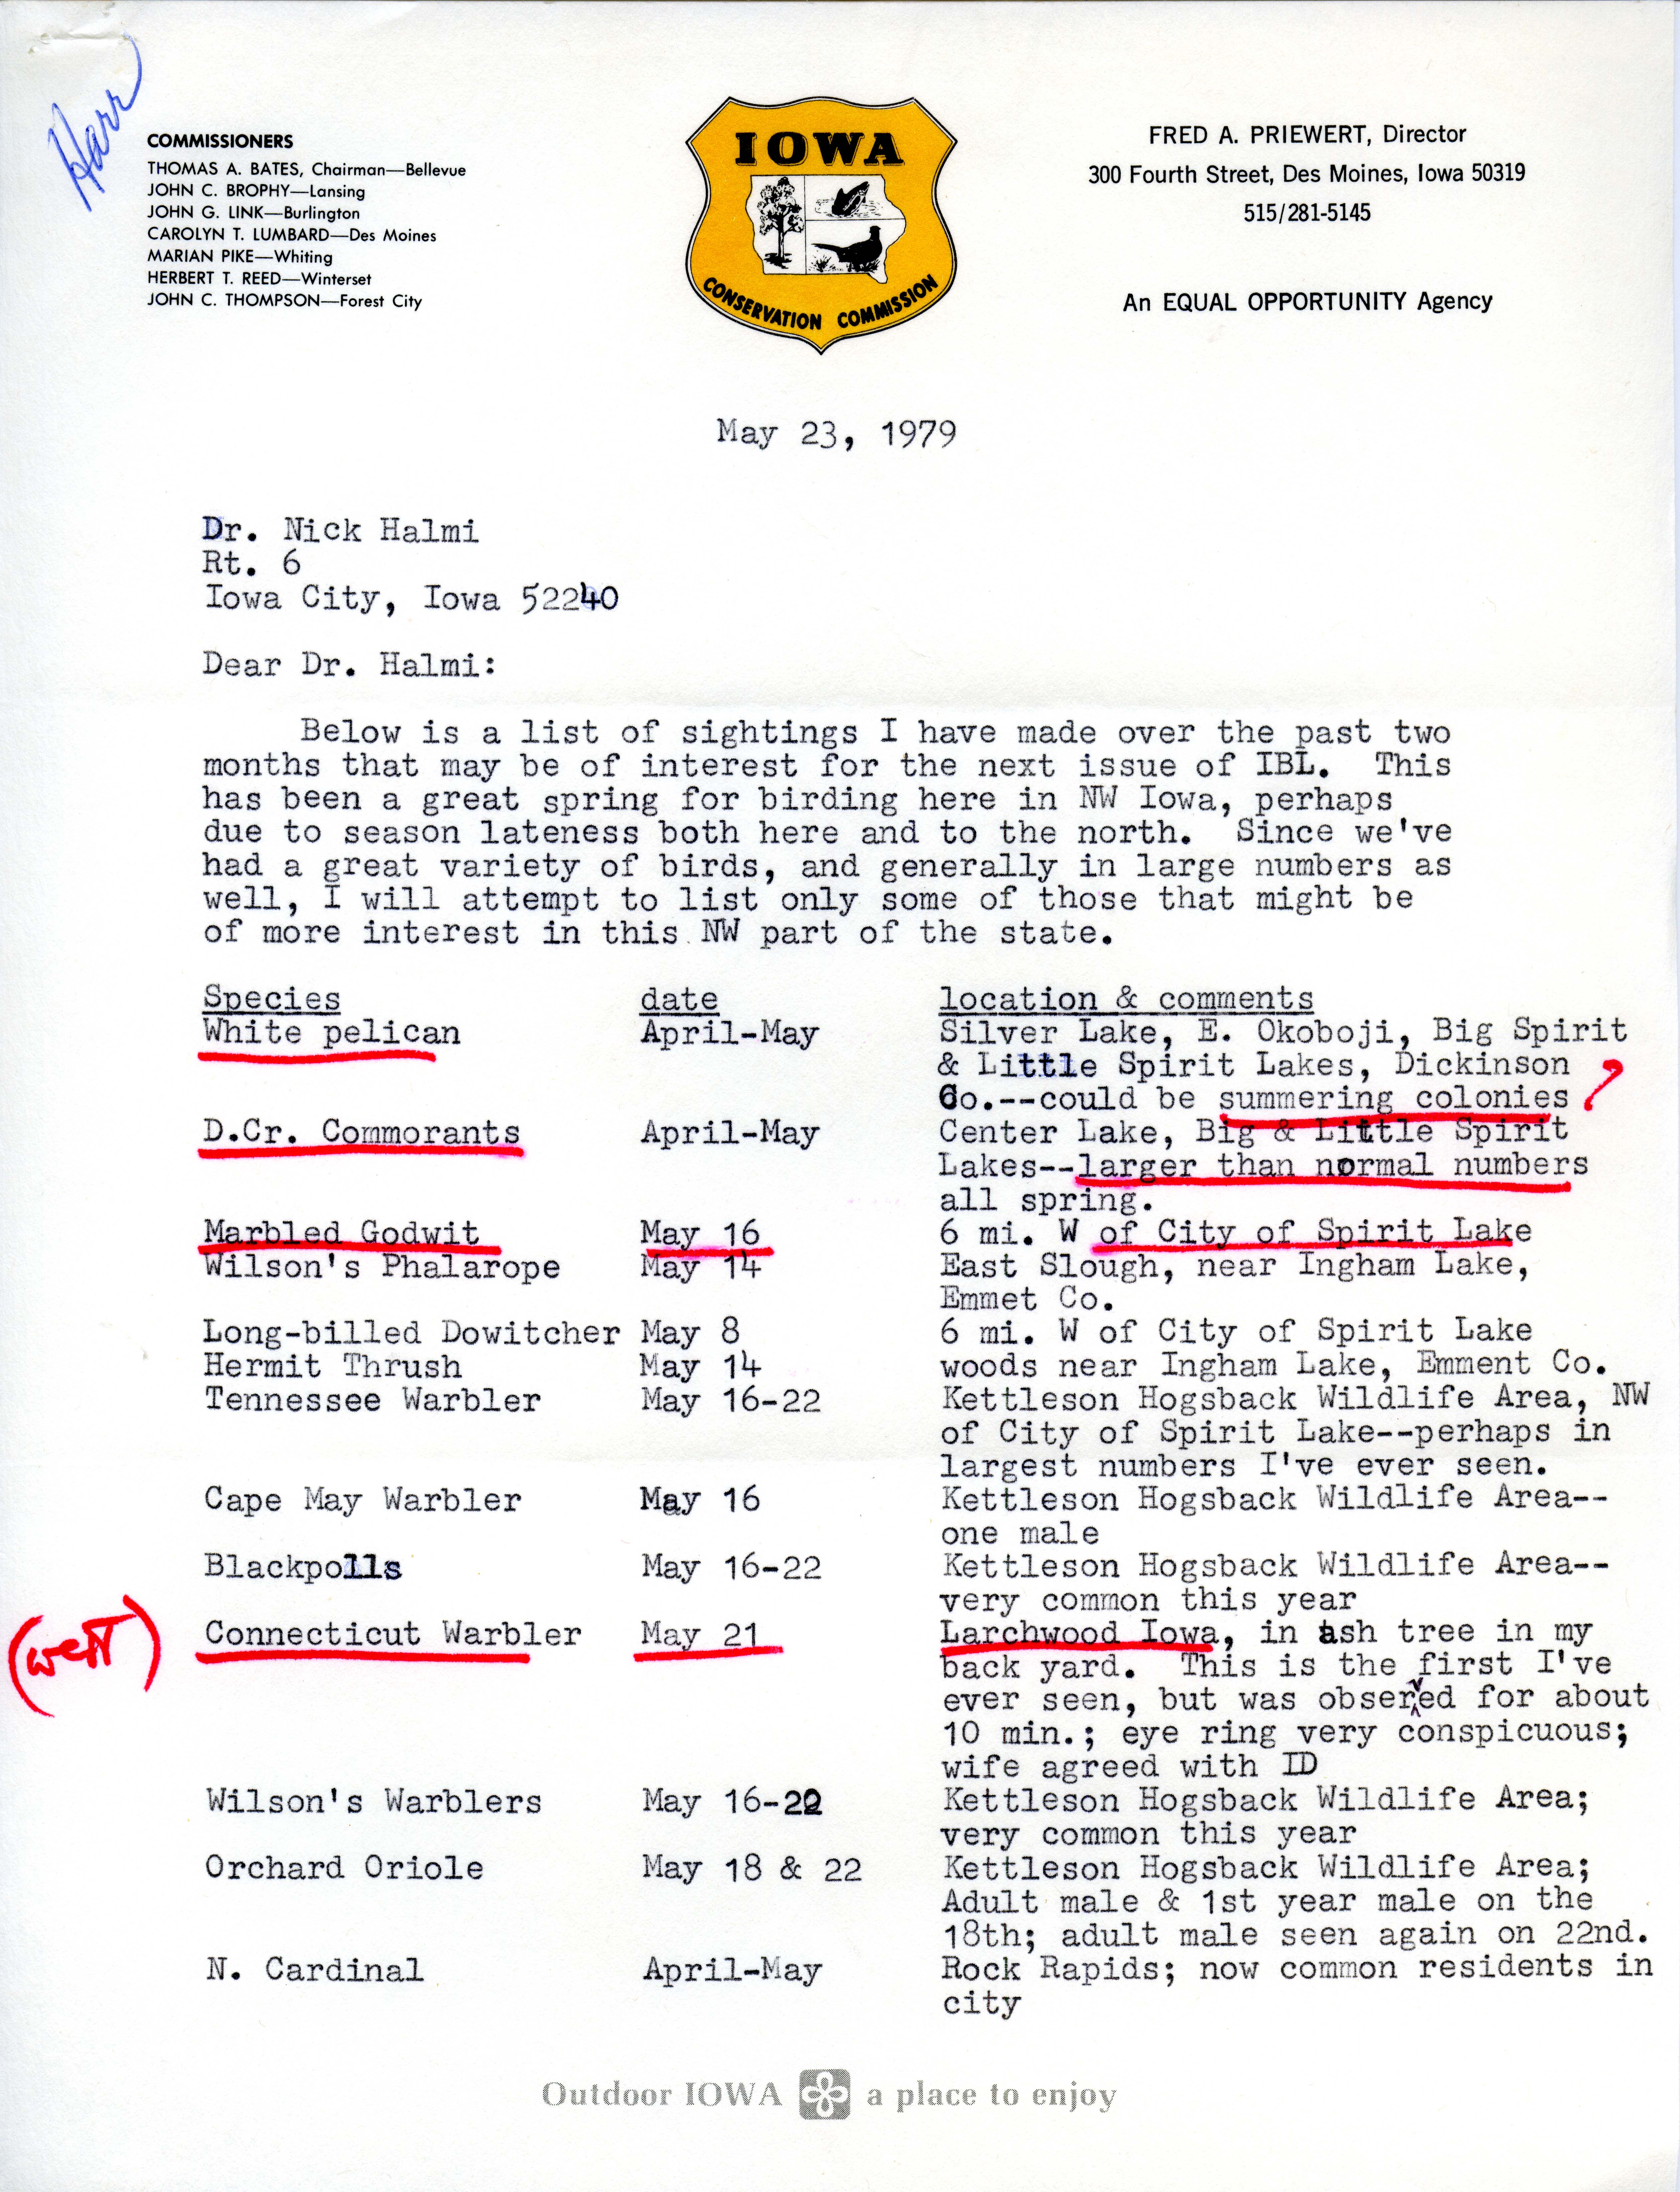 Douglas C. Harr letter to Nicholas S. Halmi regarding spring bird sightings, May 23, 1979